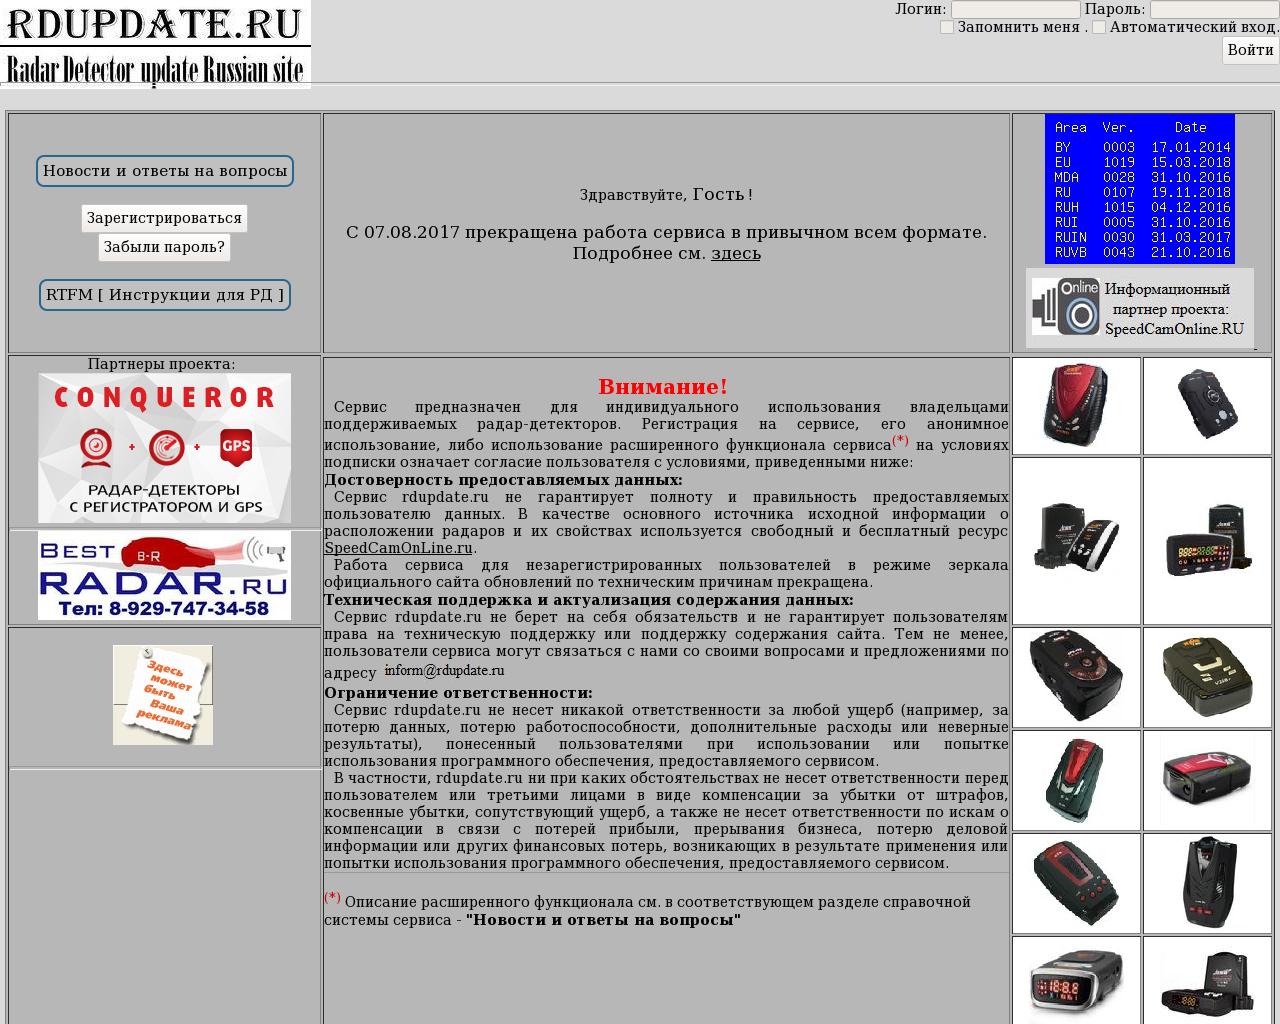 Изображение сайта rdupdate.ru в разрешении 1280x1024